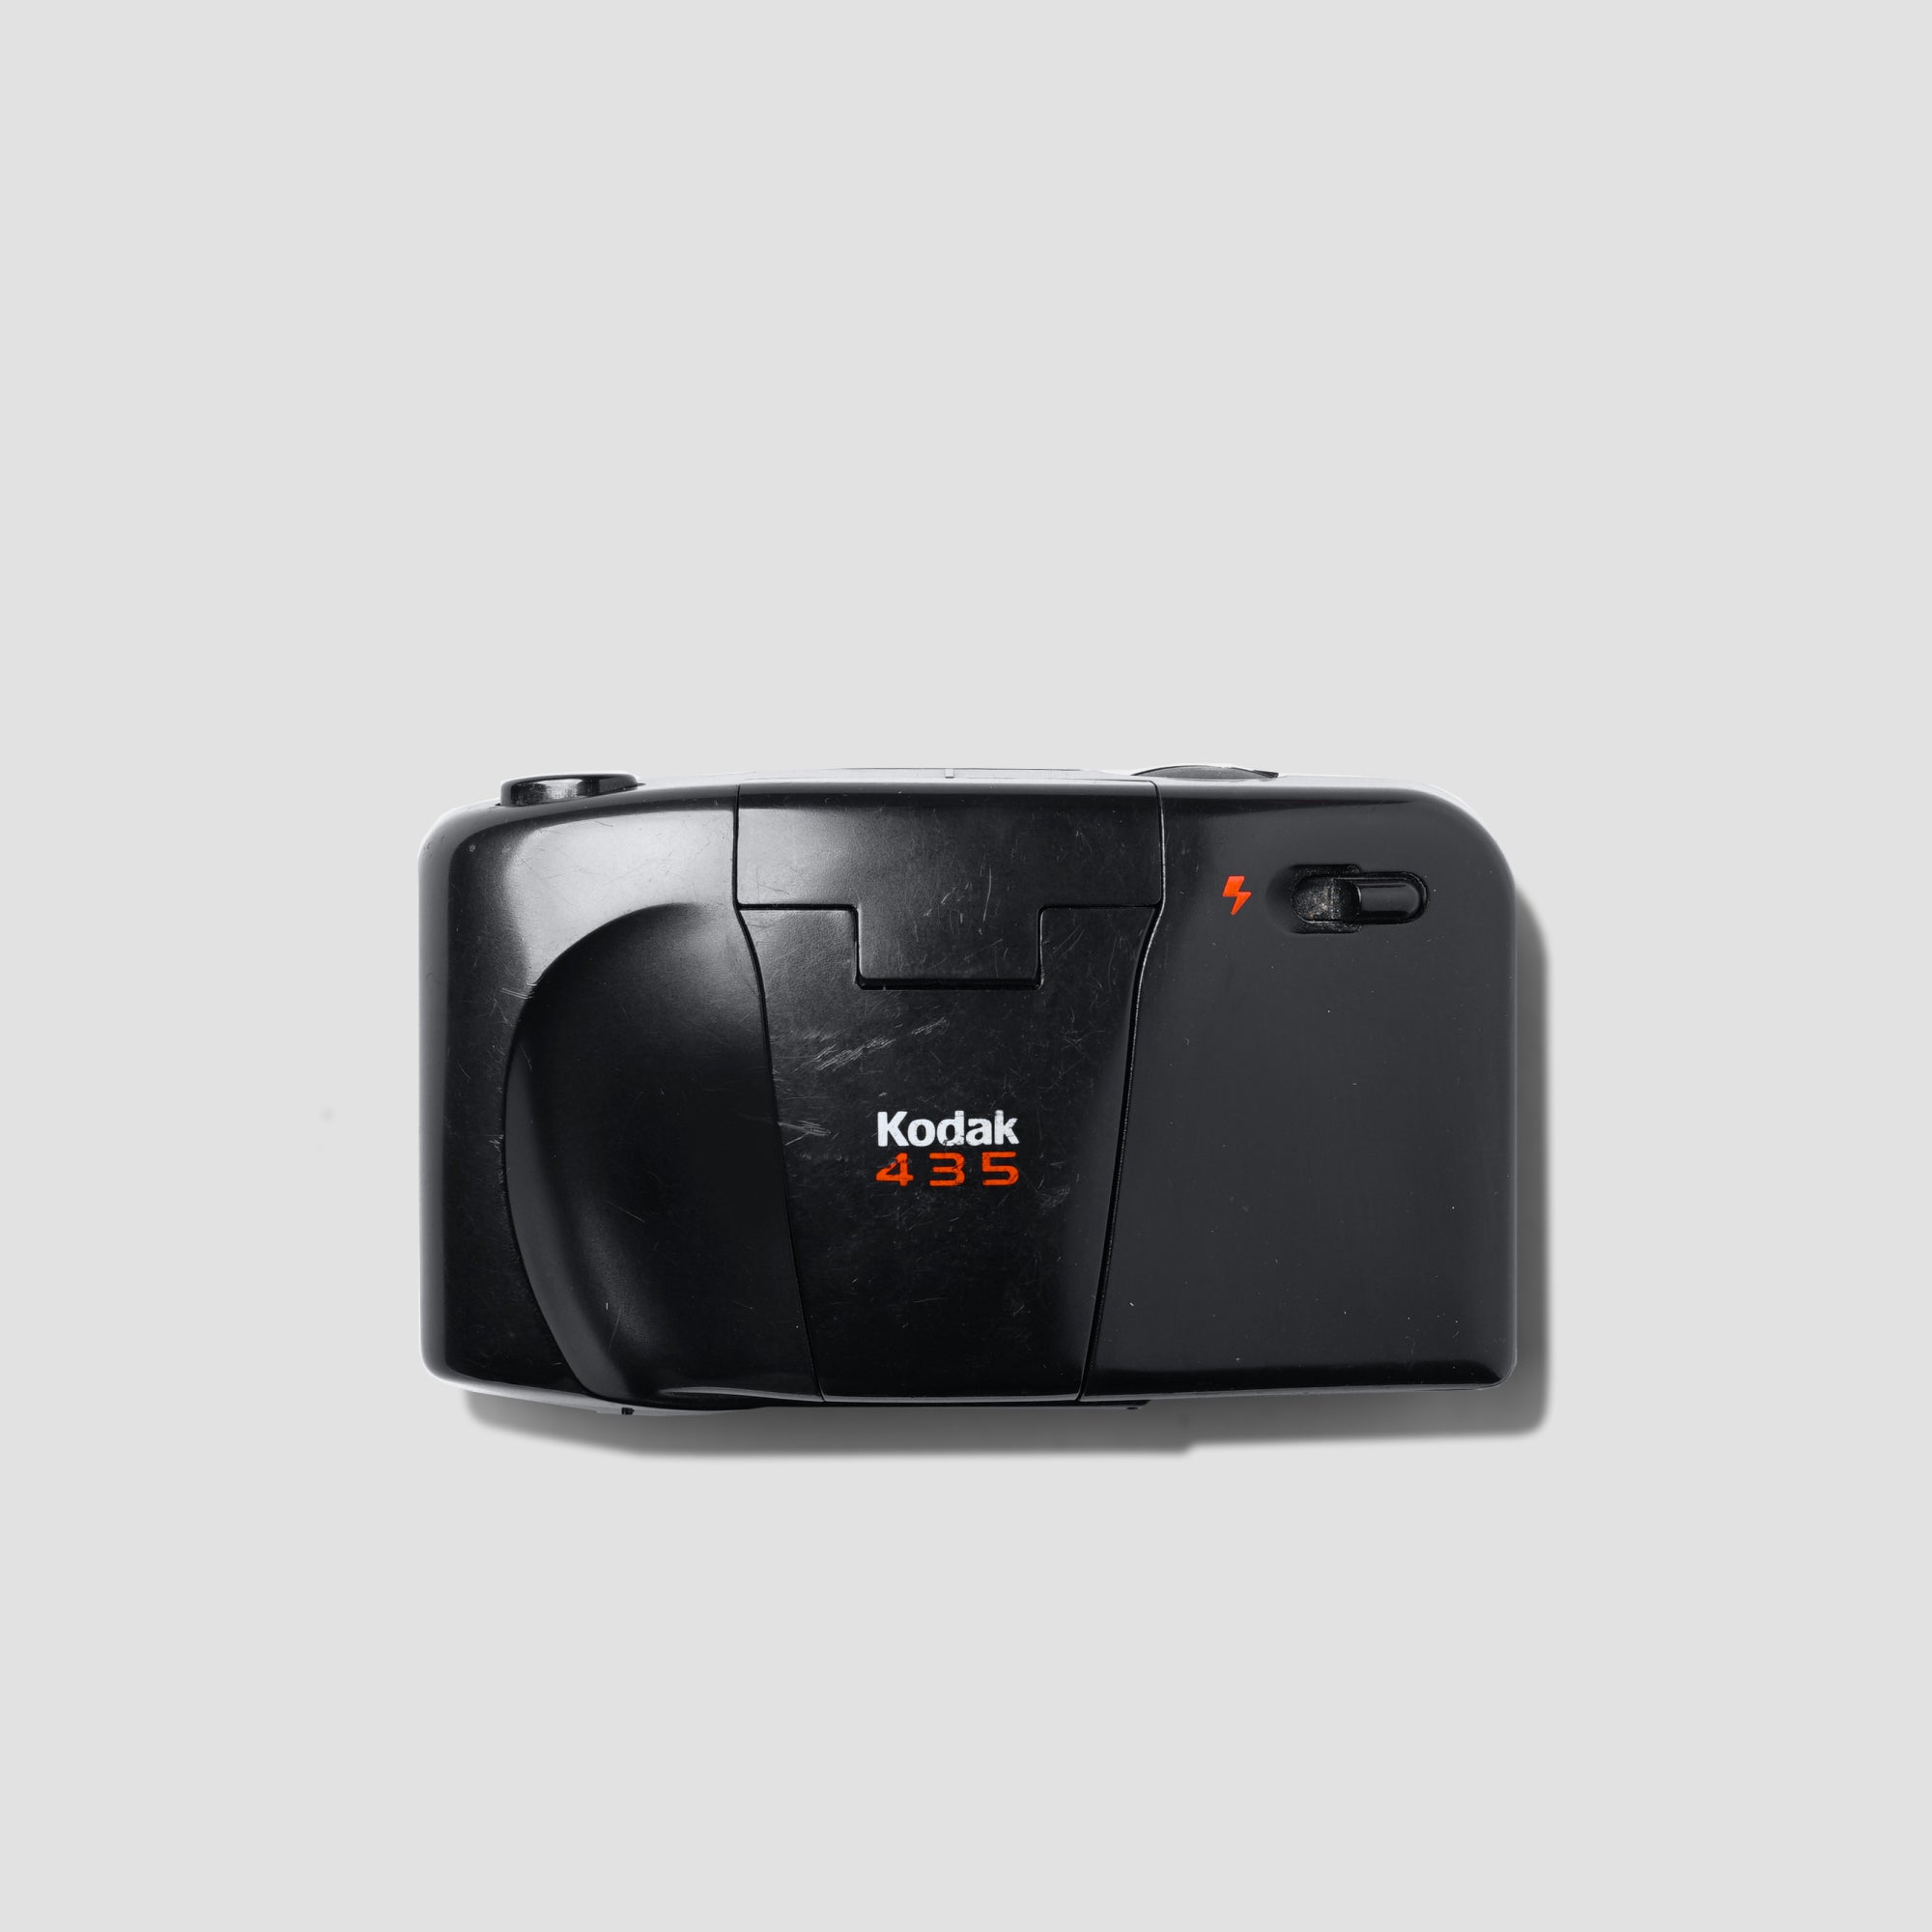 Buy Kodak 435 now at Analogue Amsterdam